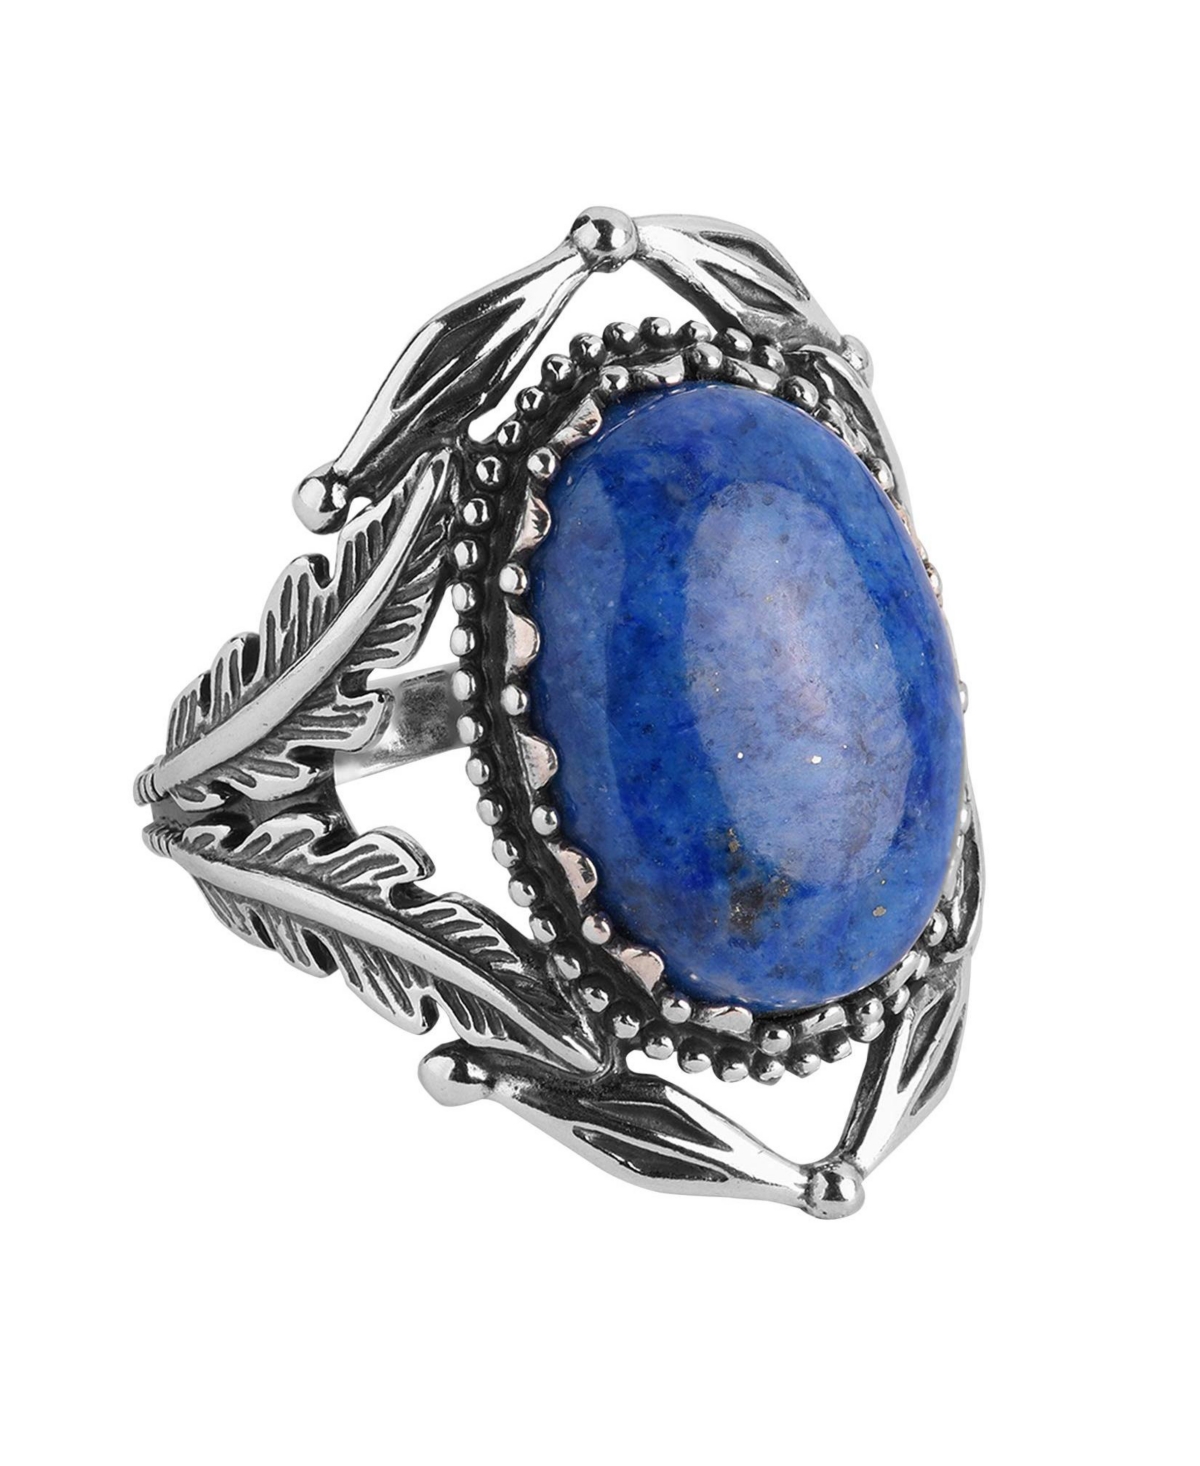 Sterling Silver and Genuine Gemstone Leaf Design Ring, Sizes 5-10 - Lapis lazuli